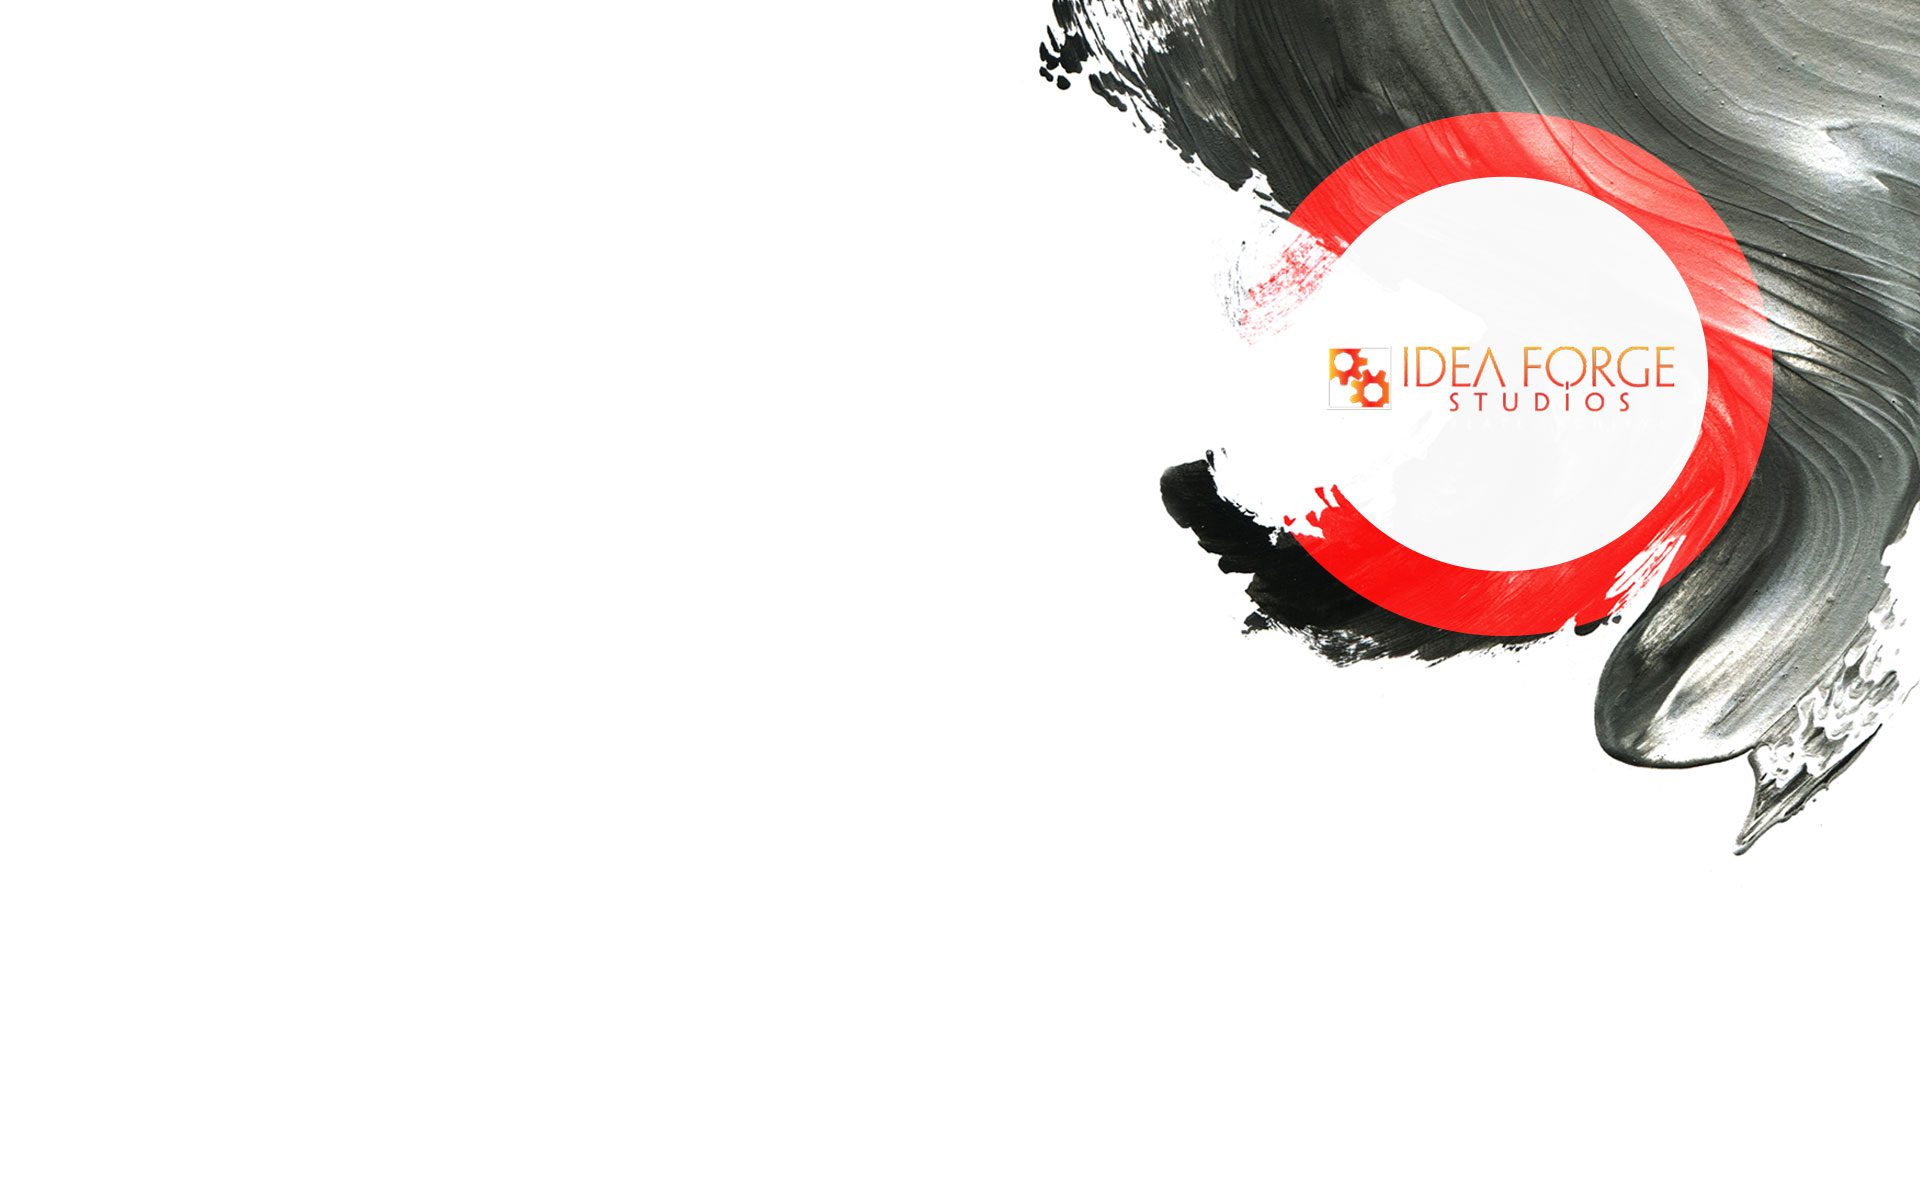 idea forge studios website design logo